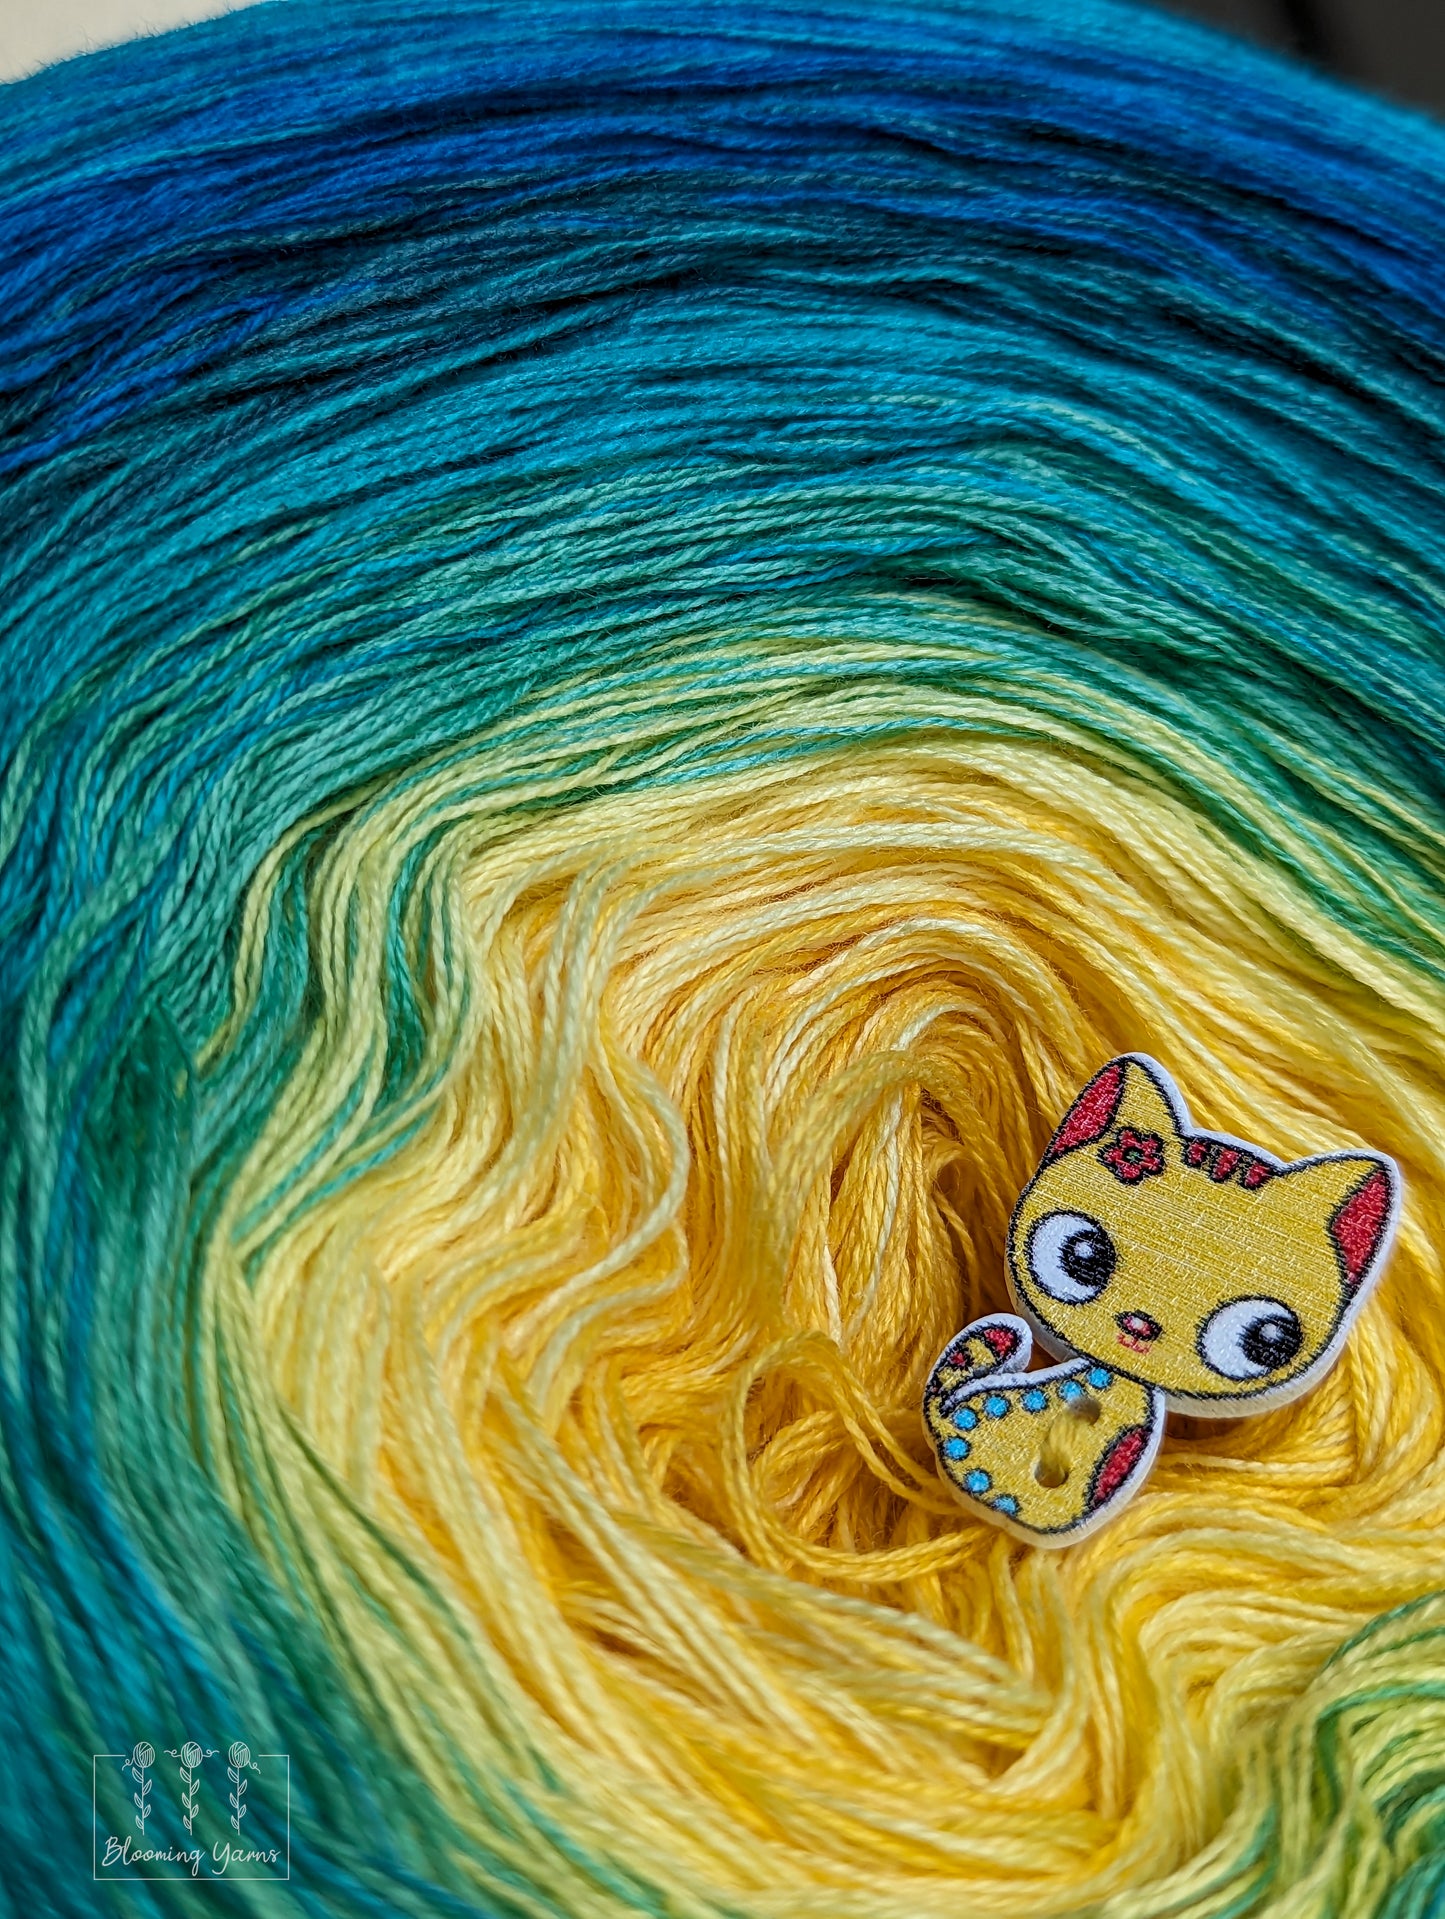 " Seashore" cotton/acrylic ombre yarn cake